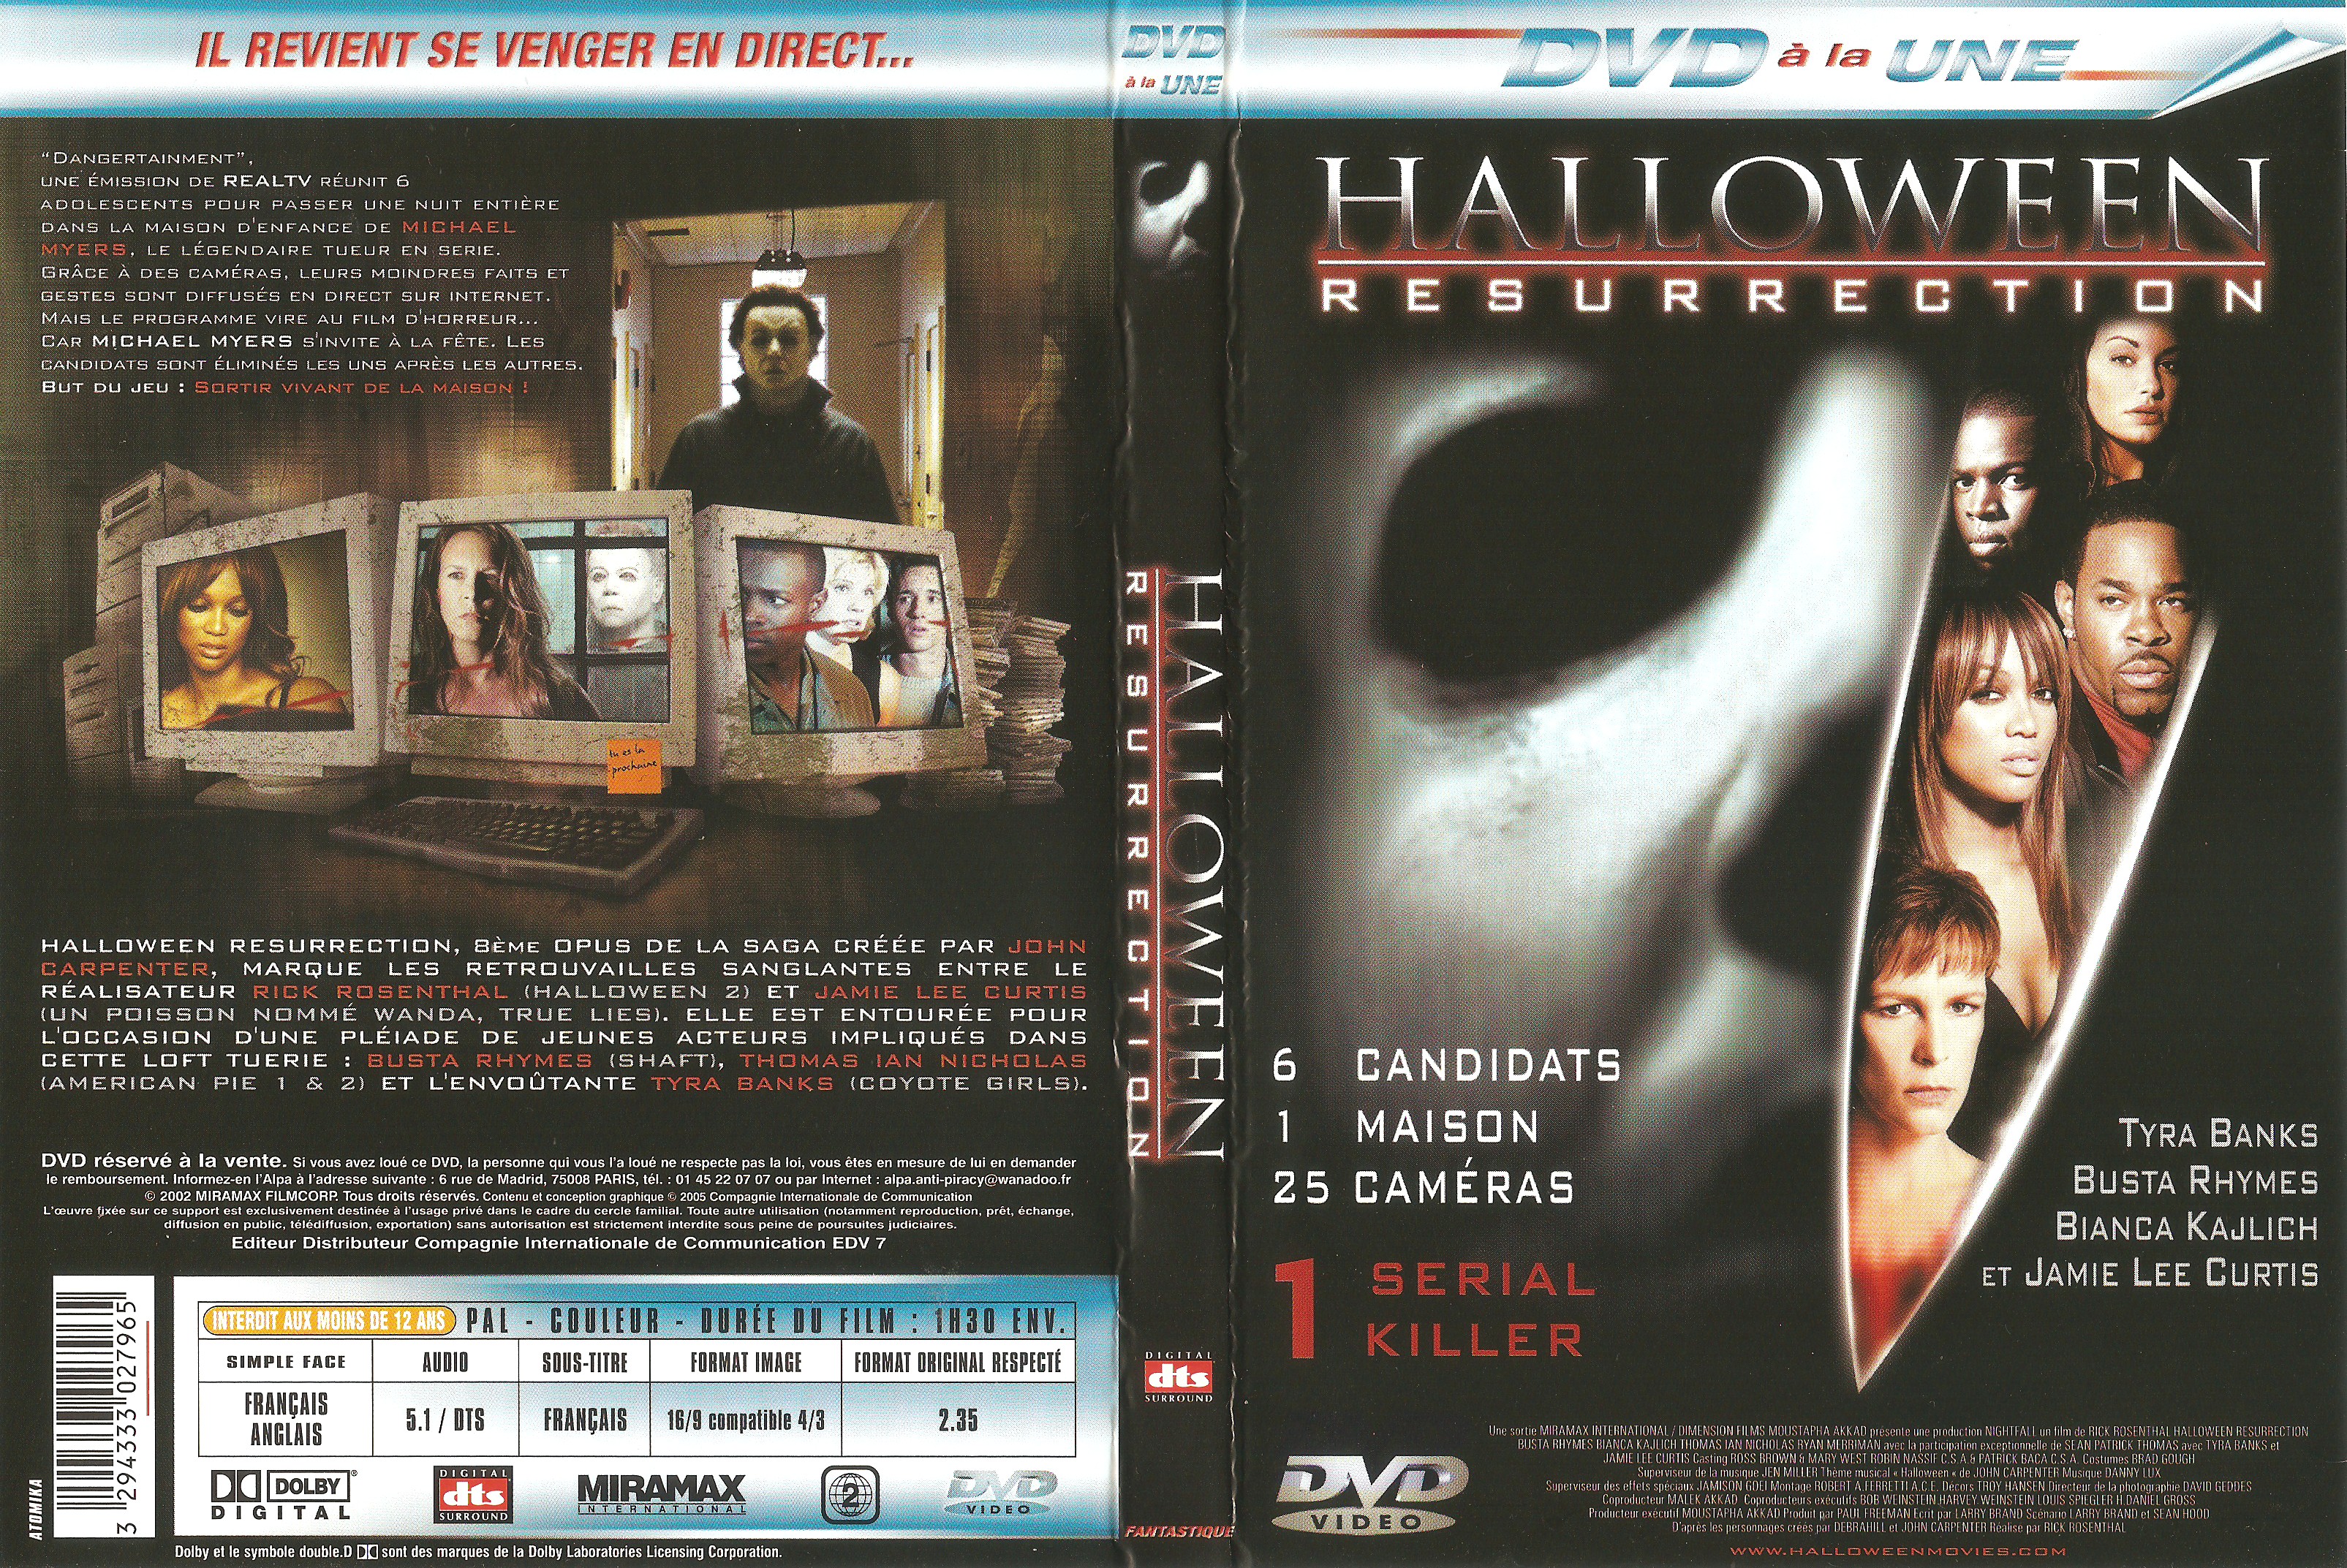 Jaquette DVD Halloween resurrection v3